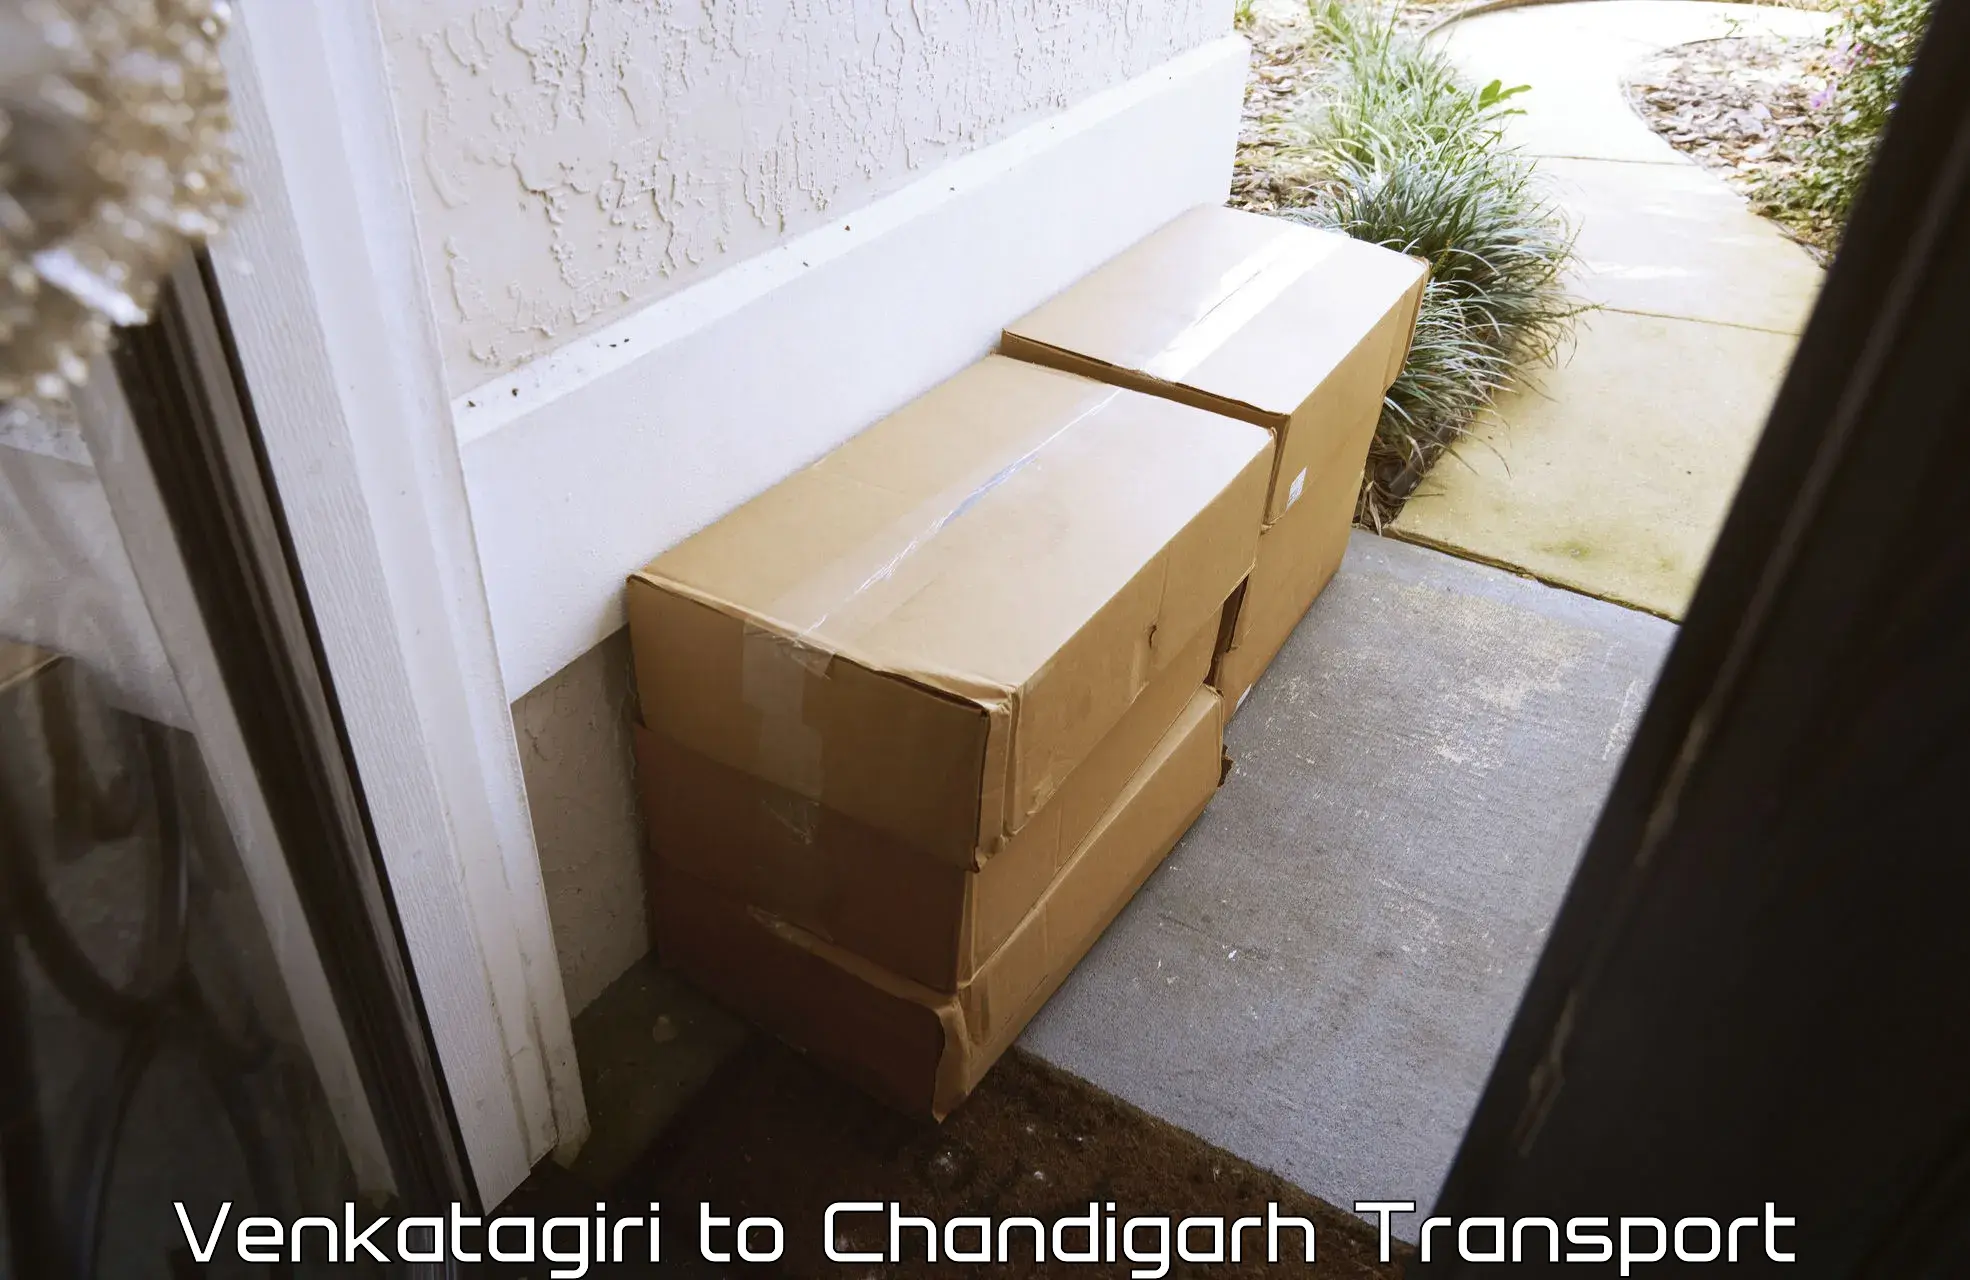 Delivery service Venkatagiri to Chandigarh